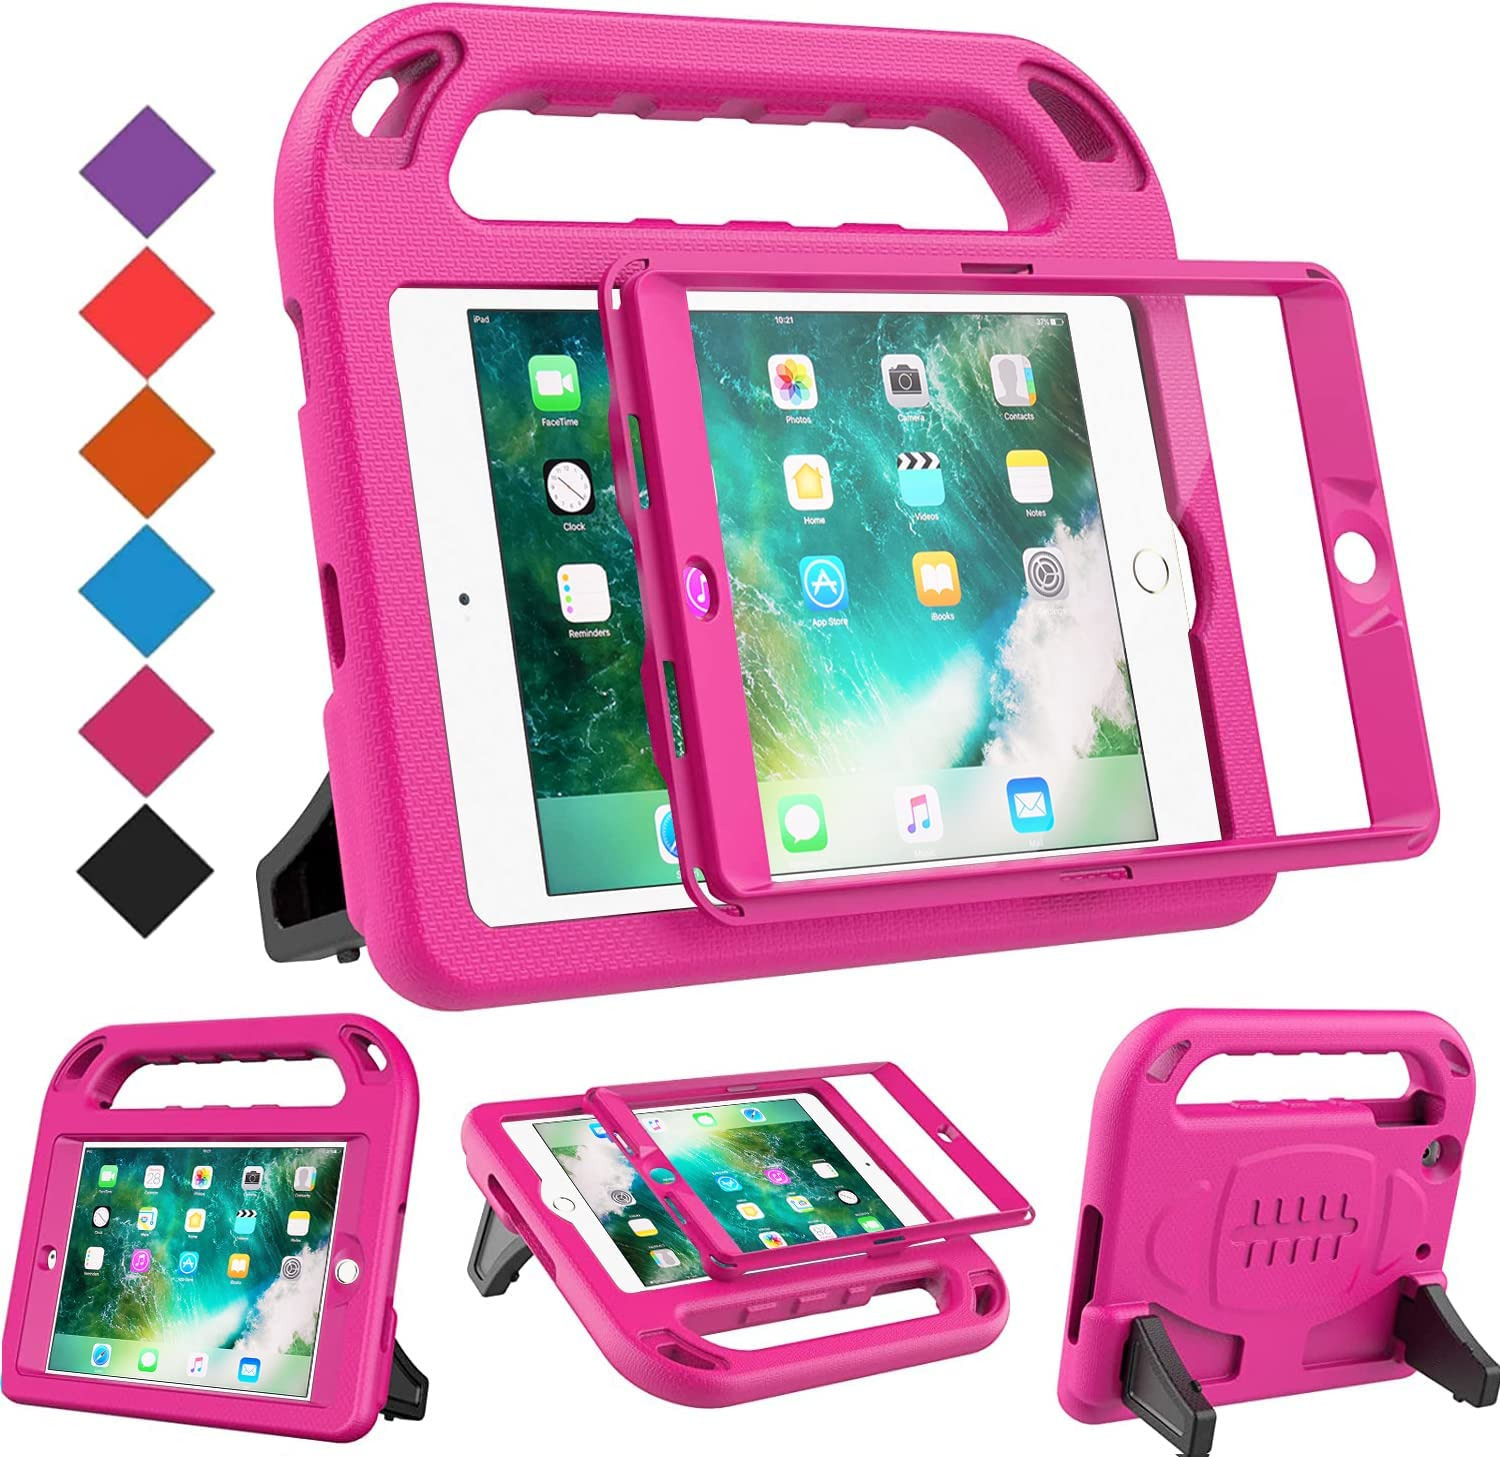 Case for Ipad Mini 1 2 3, Ipad Mini 1/2/3 Case for Kids - Built-In Screen Protec